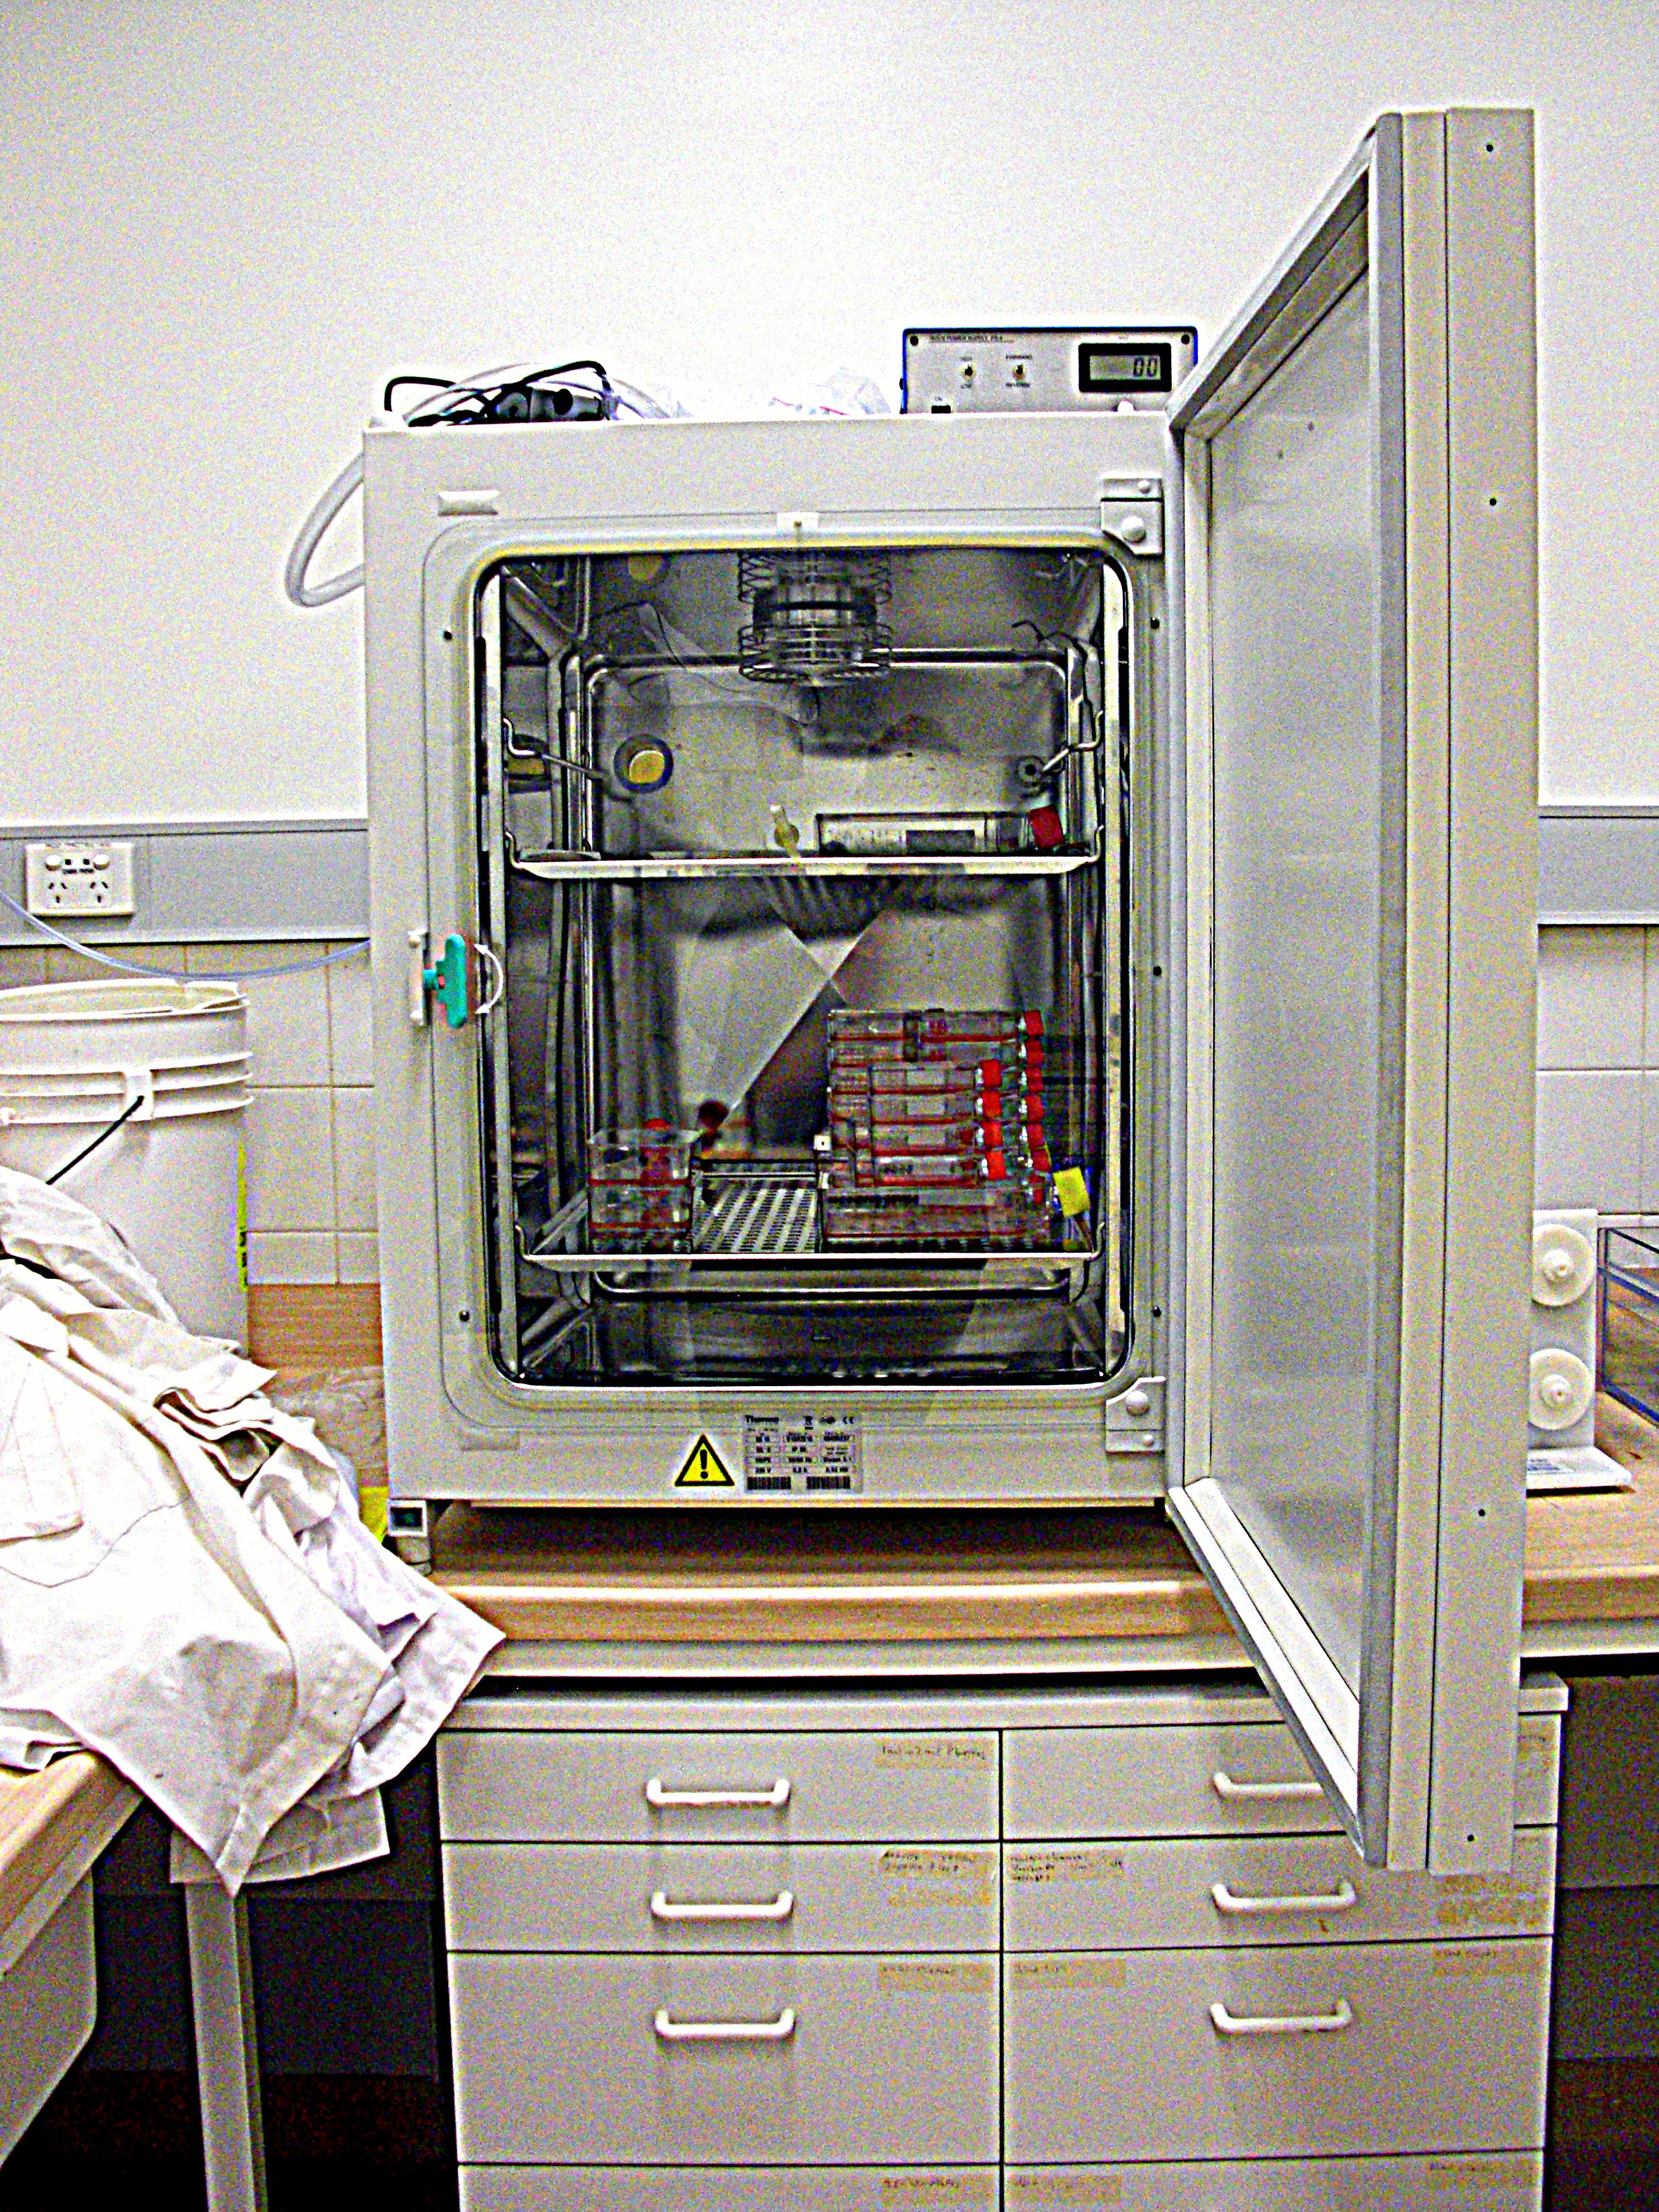 SymbioticA Lab at the University of Western Australia, 2009. (© Hannah Star Rogers)